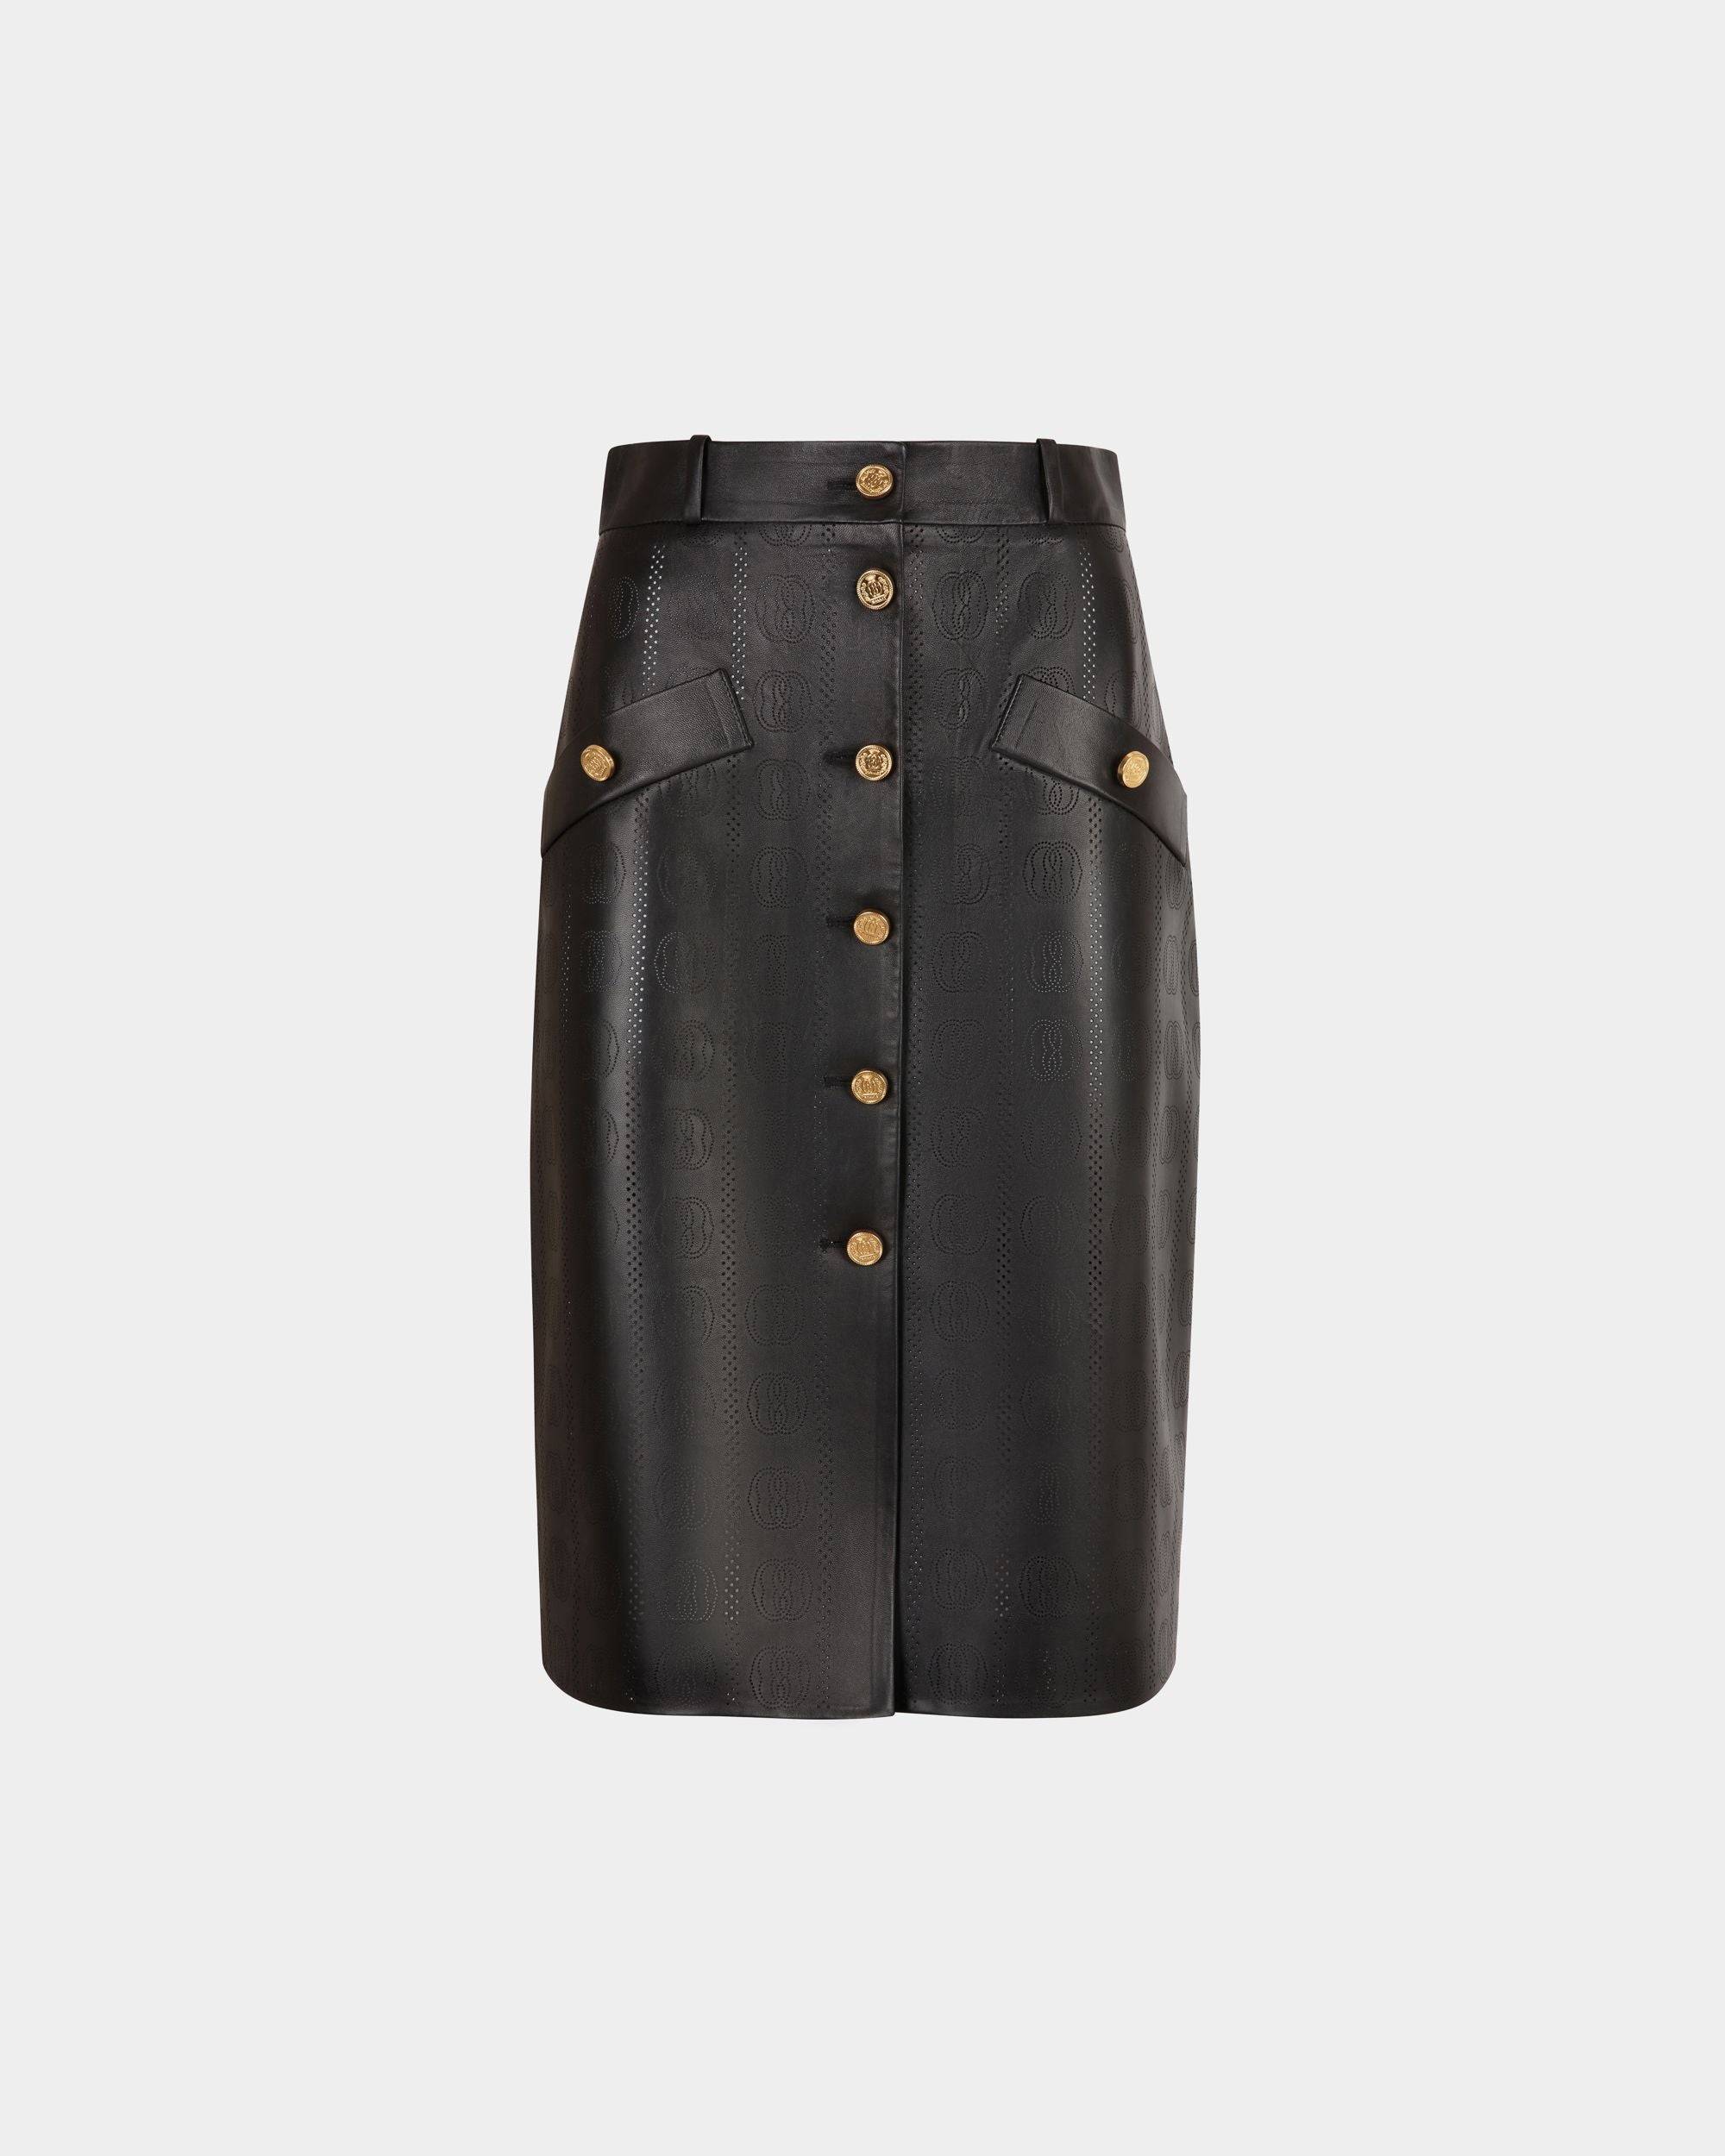 Women's Midi Skirt In Black Leather | Bally | Still Life Front